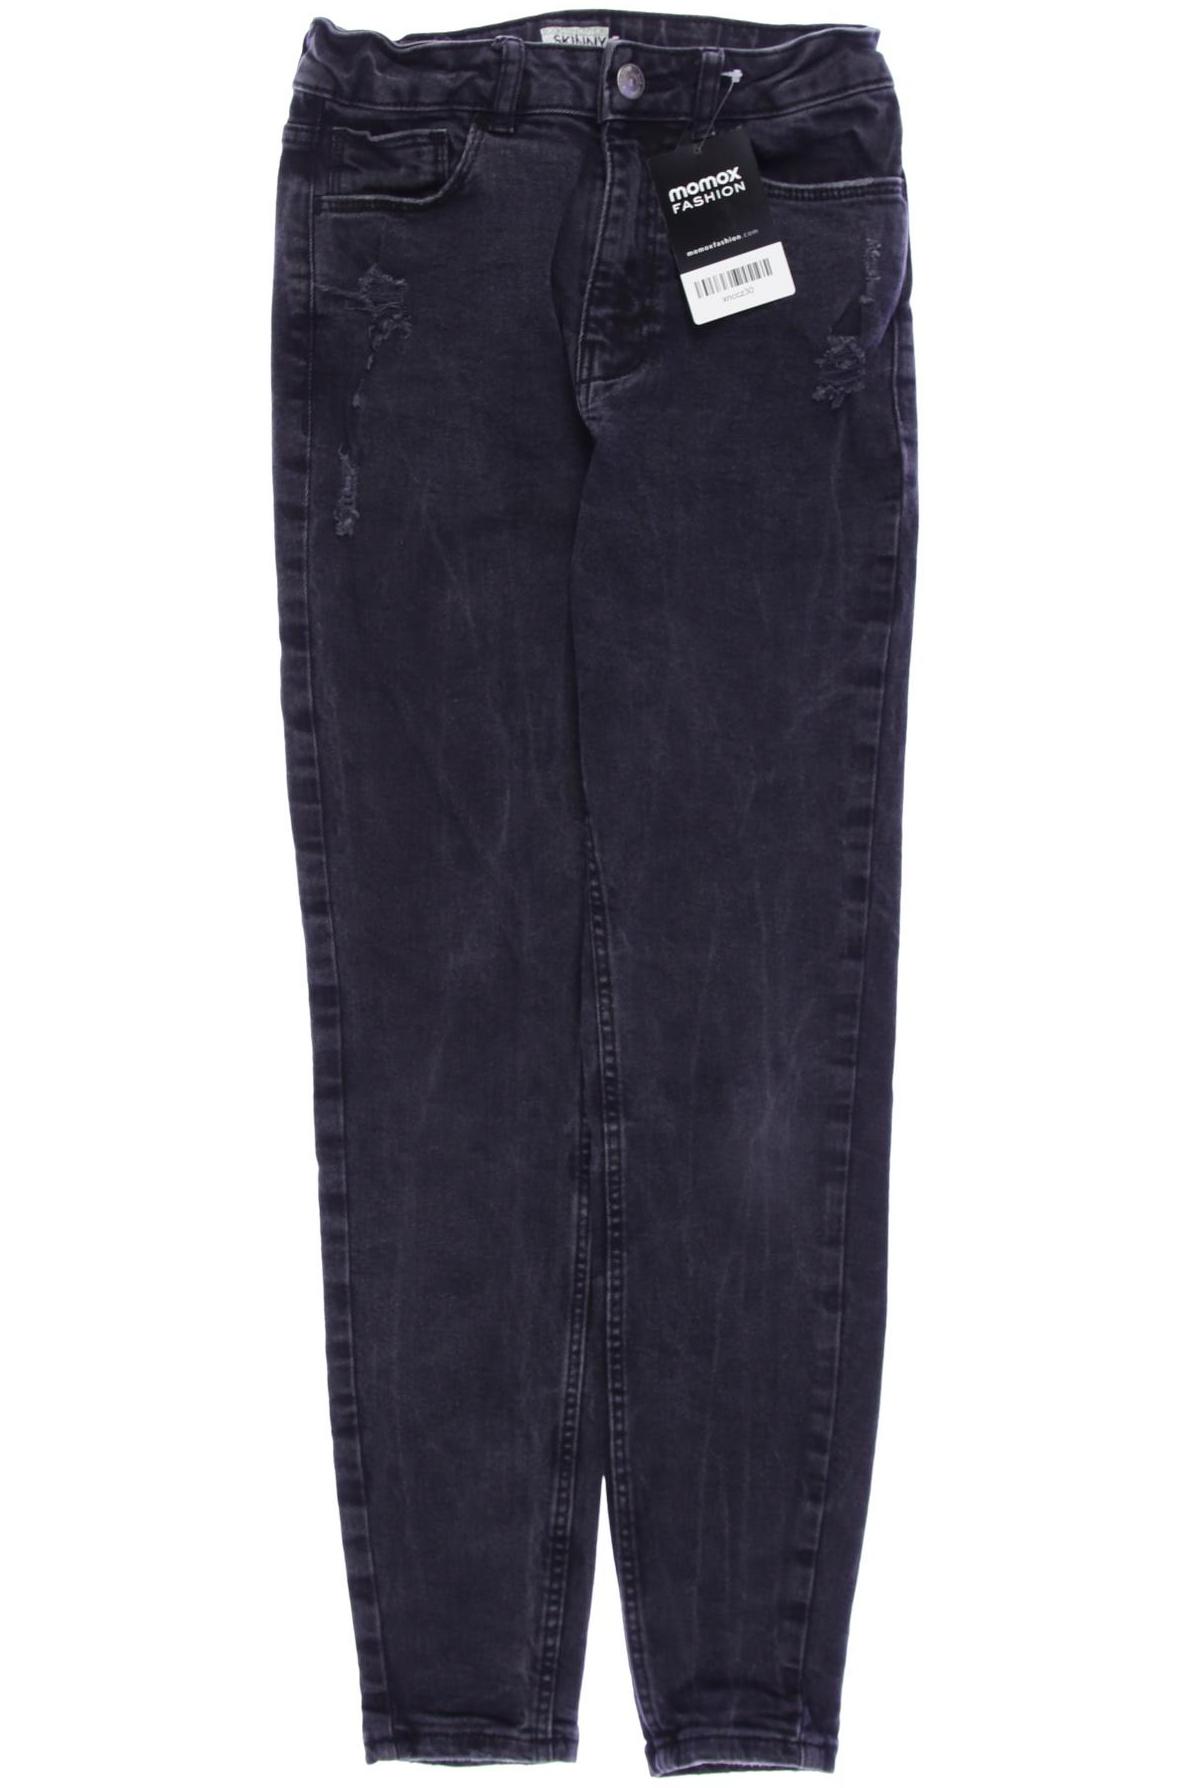 Kiabi Damen Jeans, schwarz, Gr. uni von Kiabi